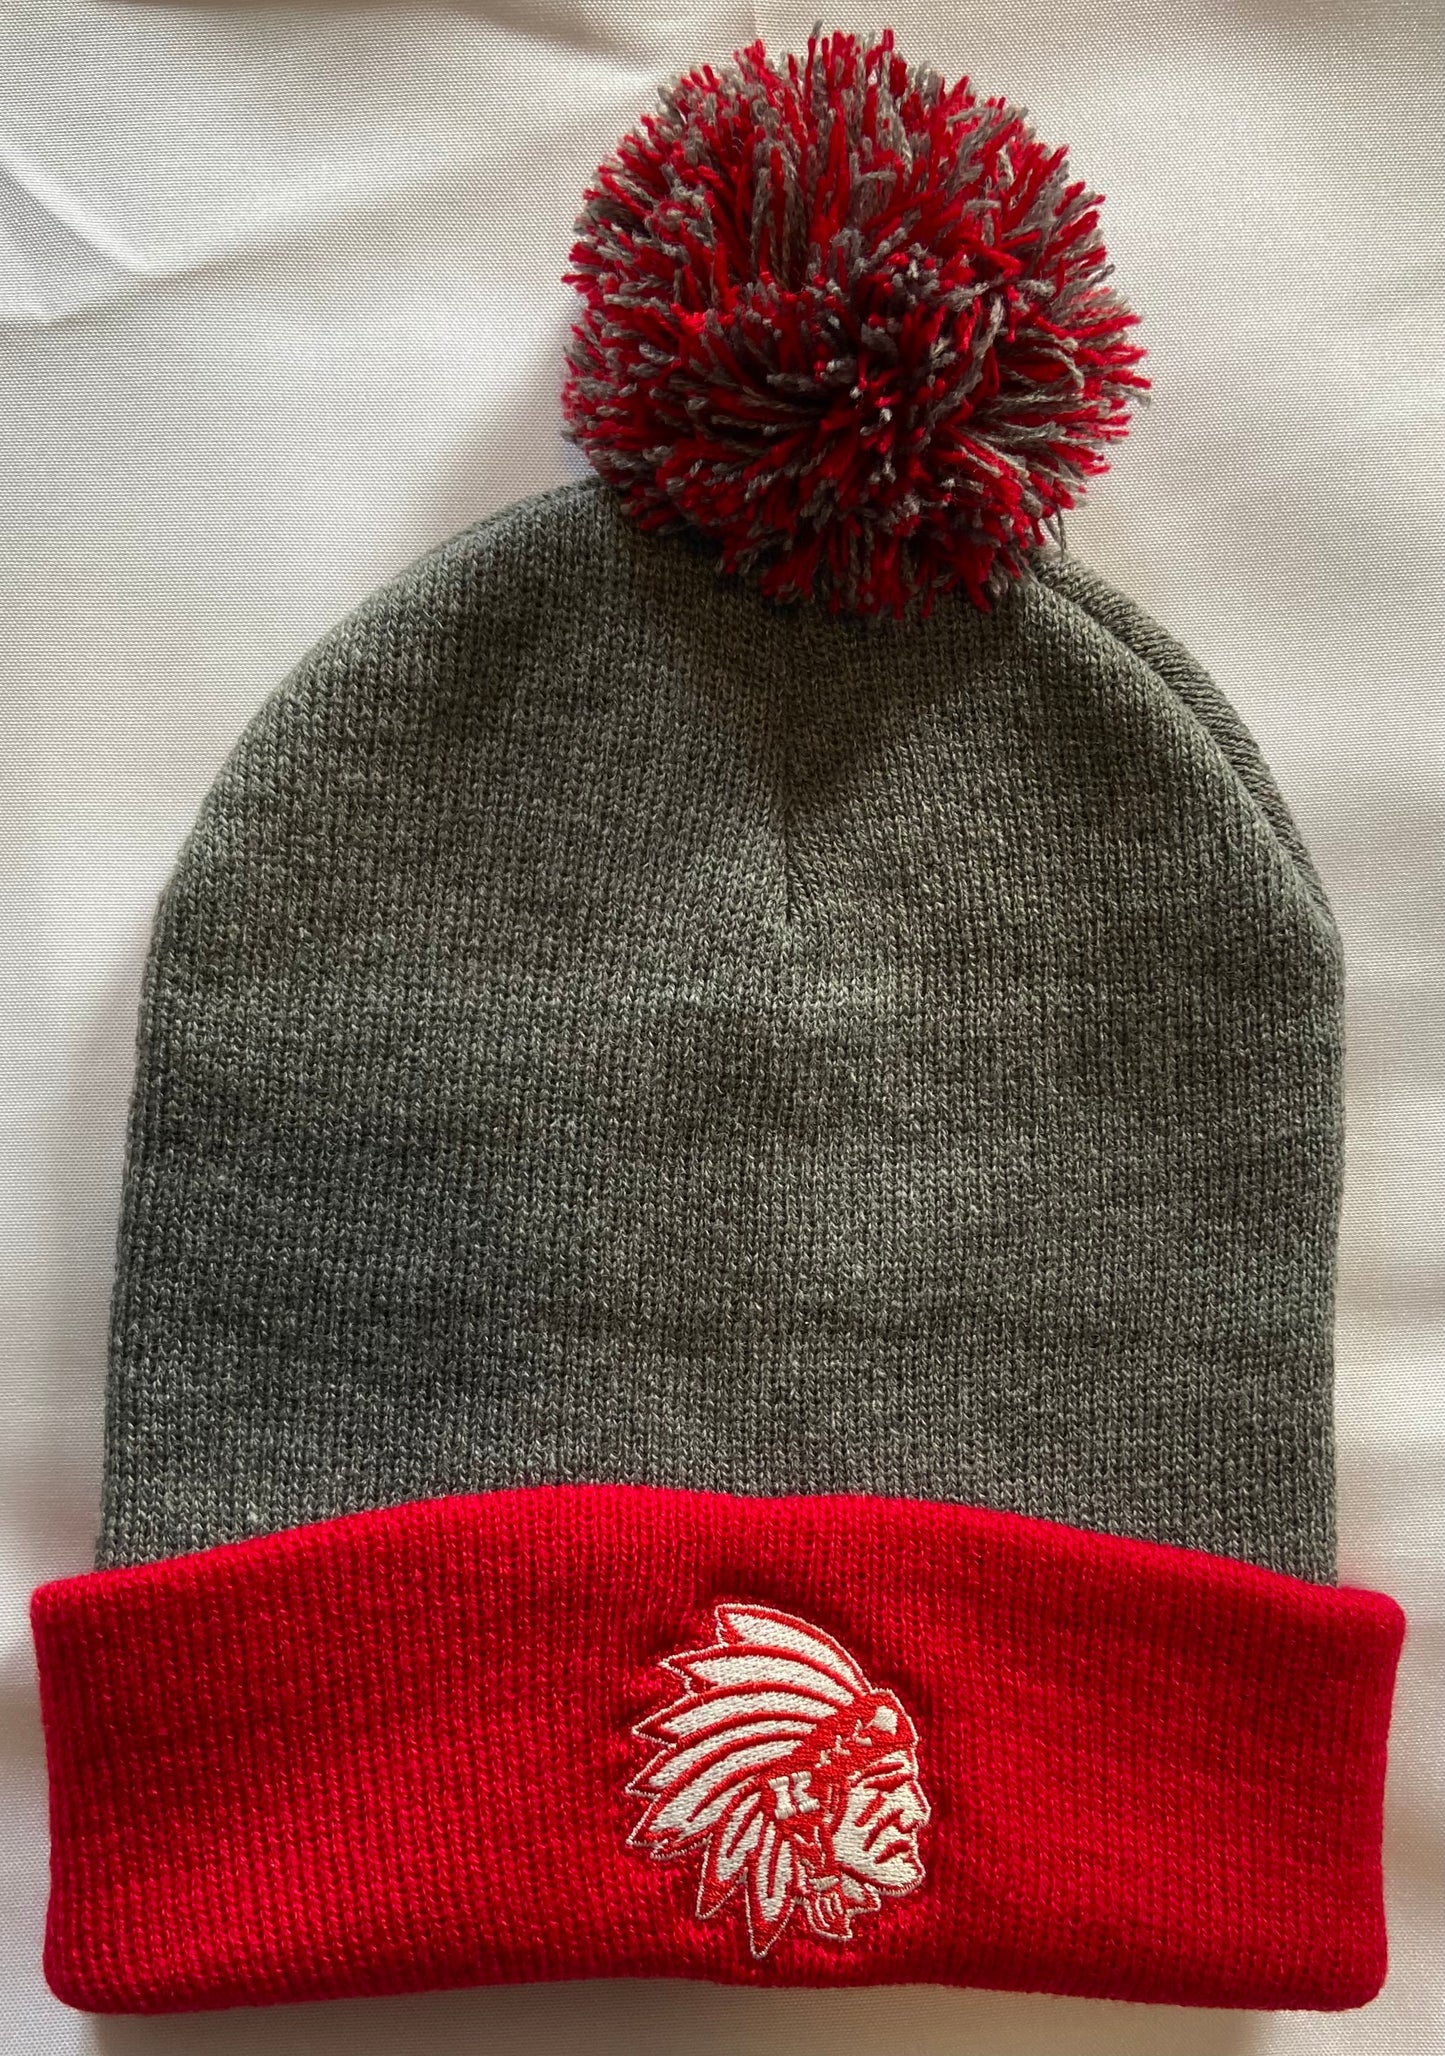 Knox Redskins Embroidered Logo Beanies Winter Pom Pom Hats - 3 styles Red Black Grey